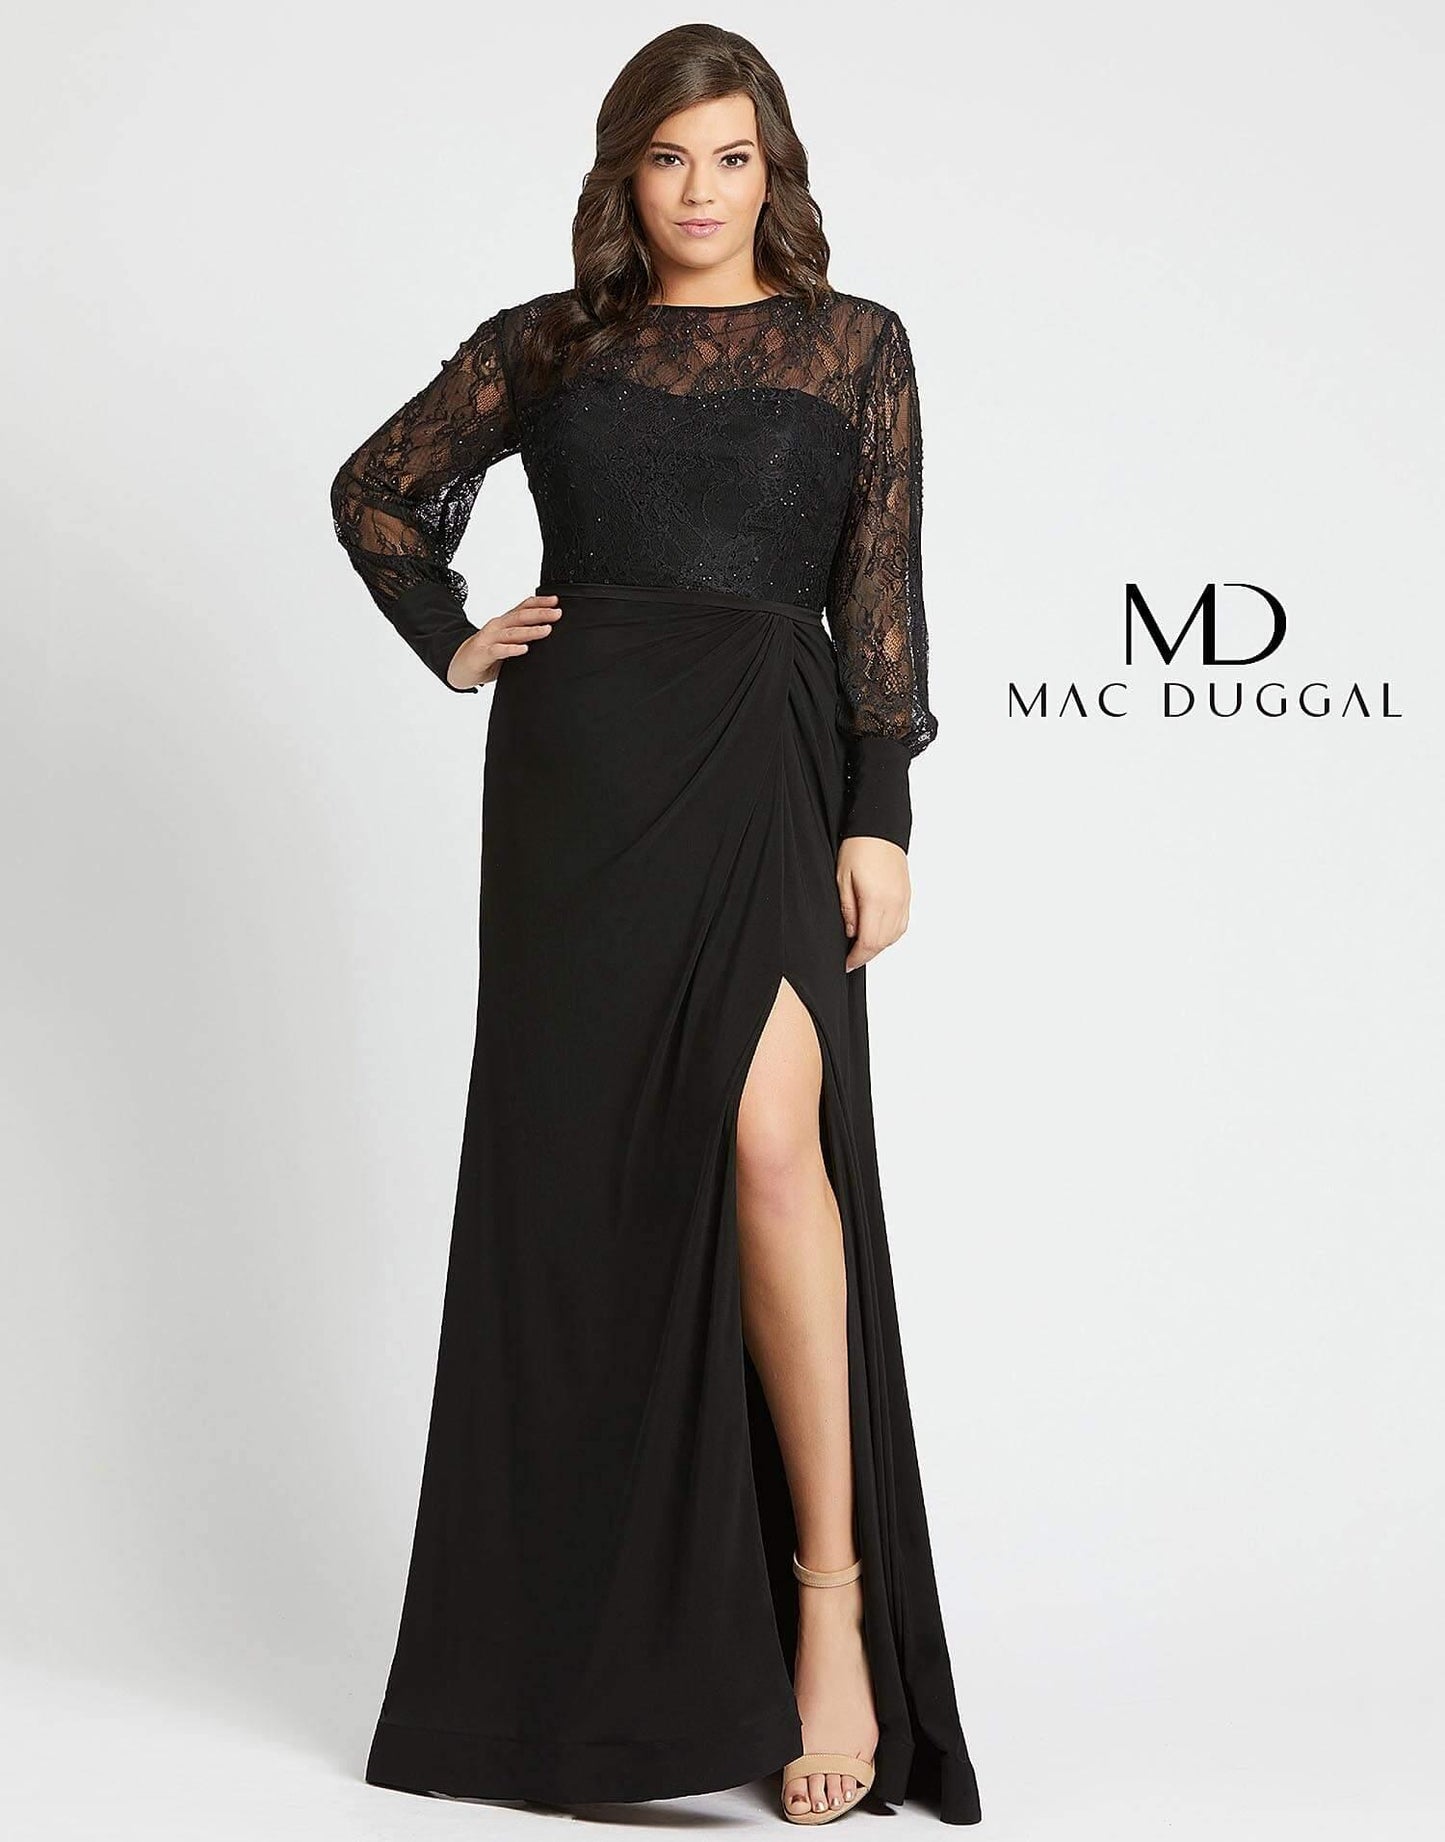 Mac Duggal Fabulouss Long Plus Size Formal Prom Dress 67143F - The Dress Outlet Mac Duggal